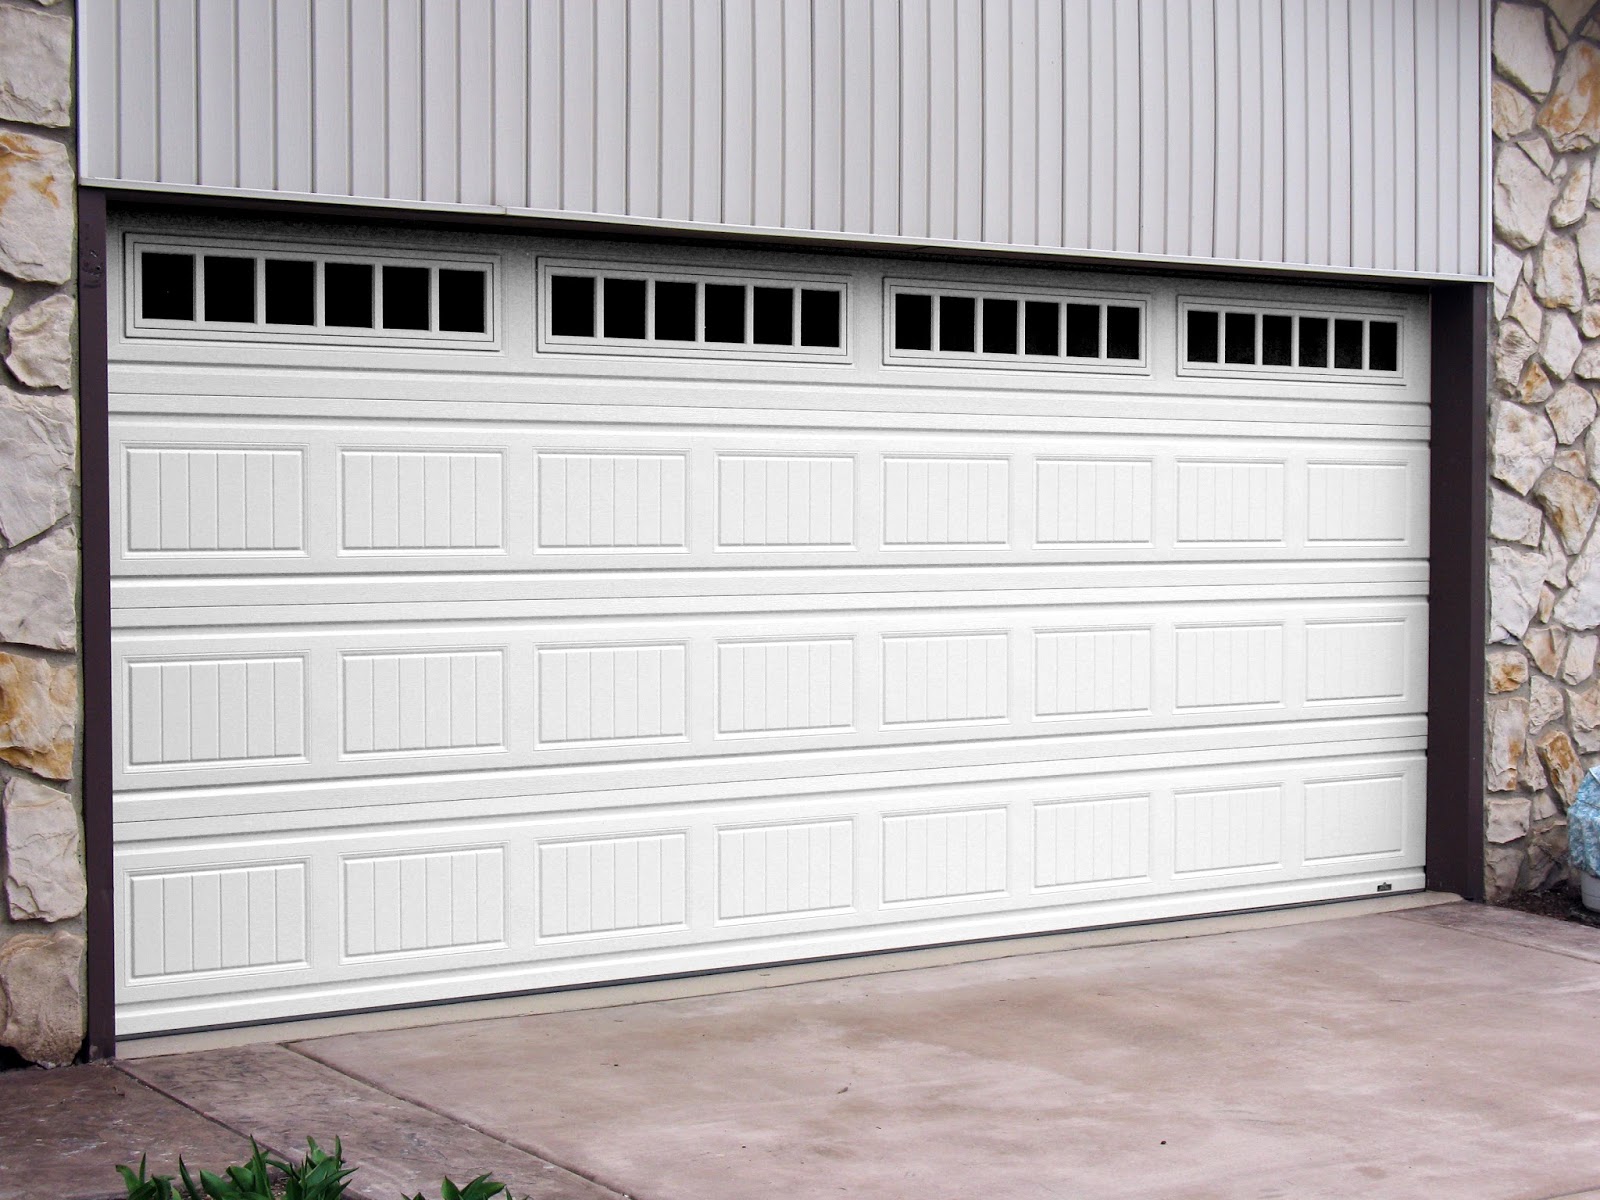 Maui Garage Doors, Inc. - Home Facebook